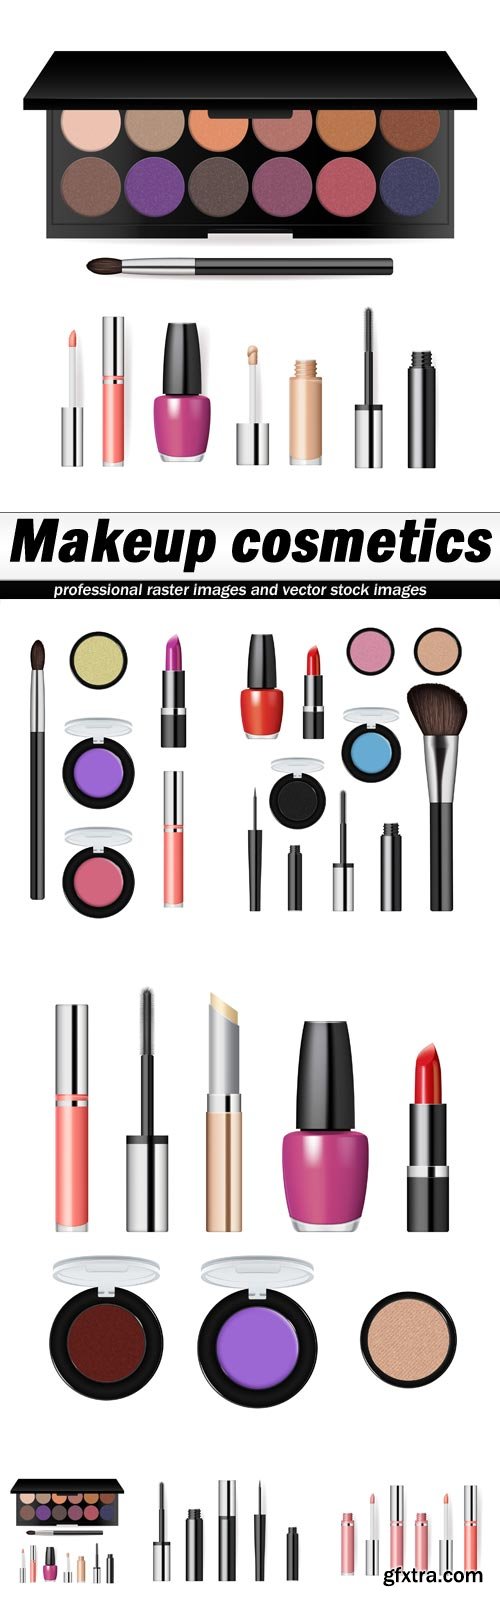 Makeup cosmetics - 6 EPS